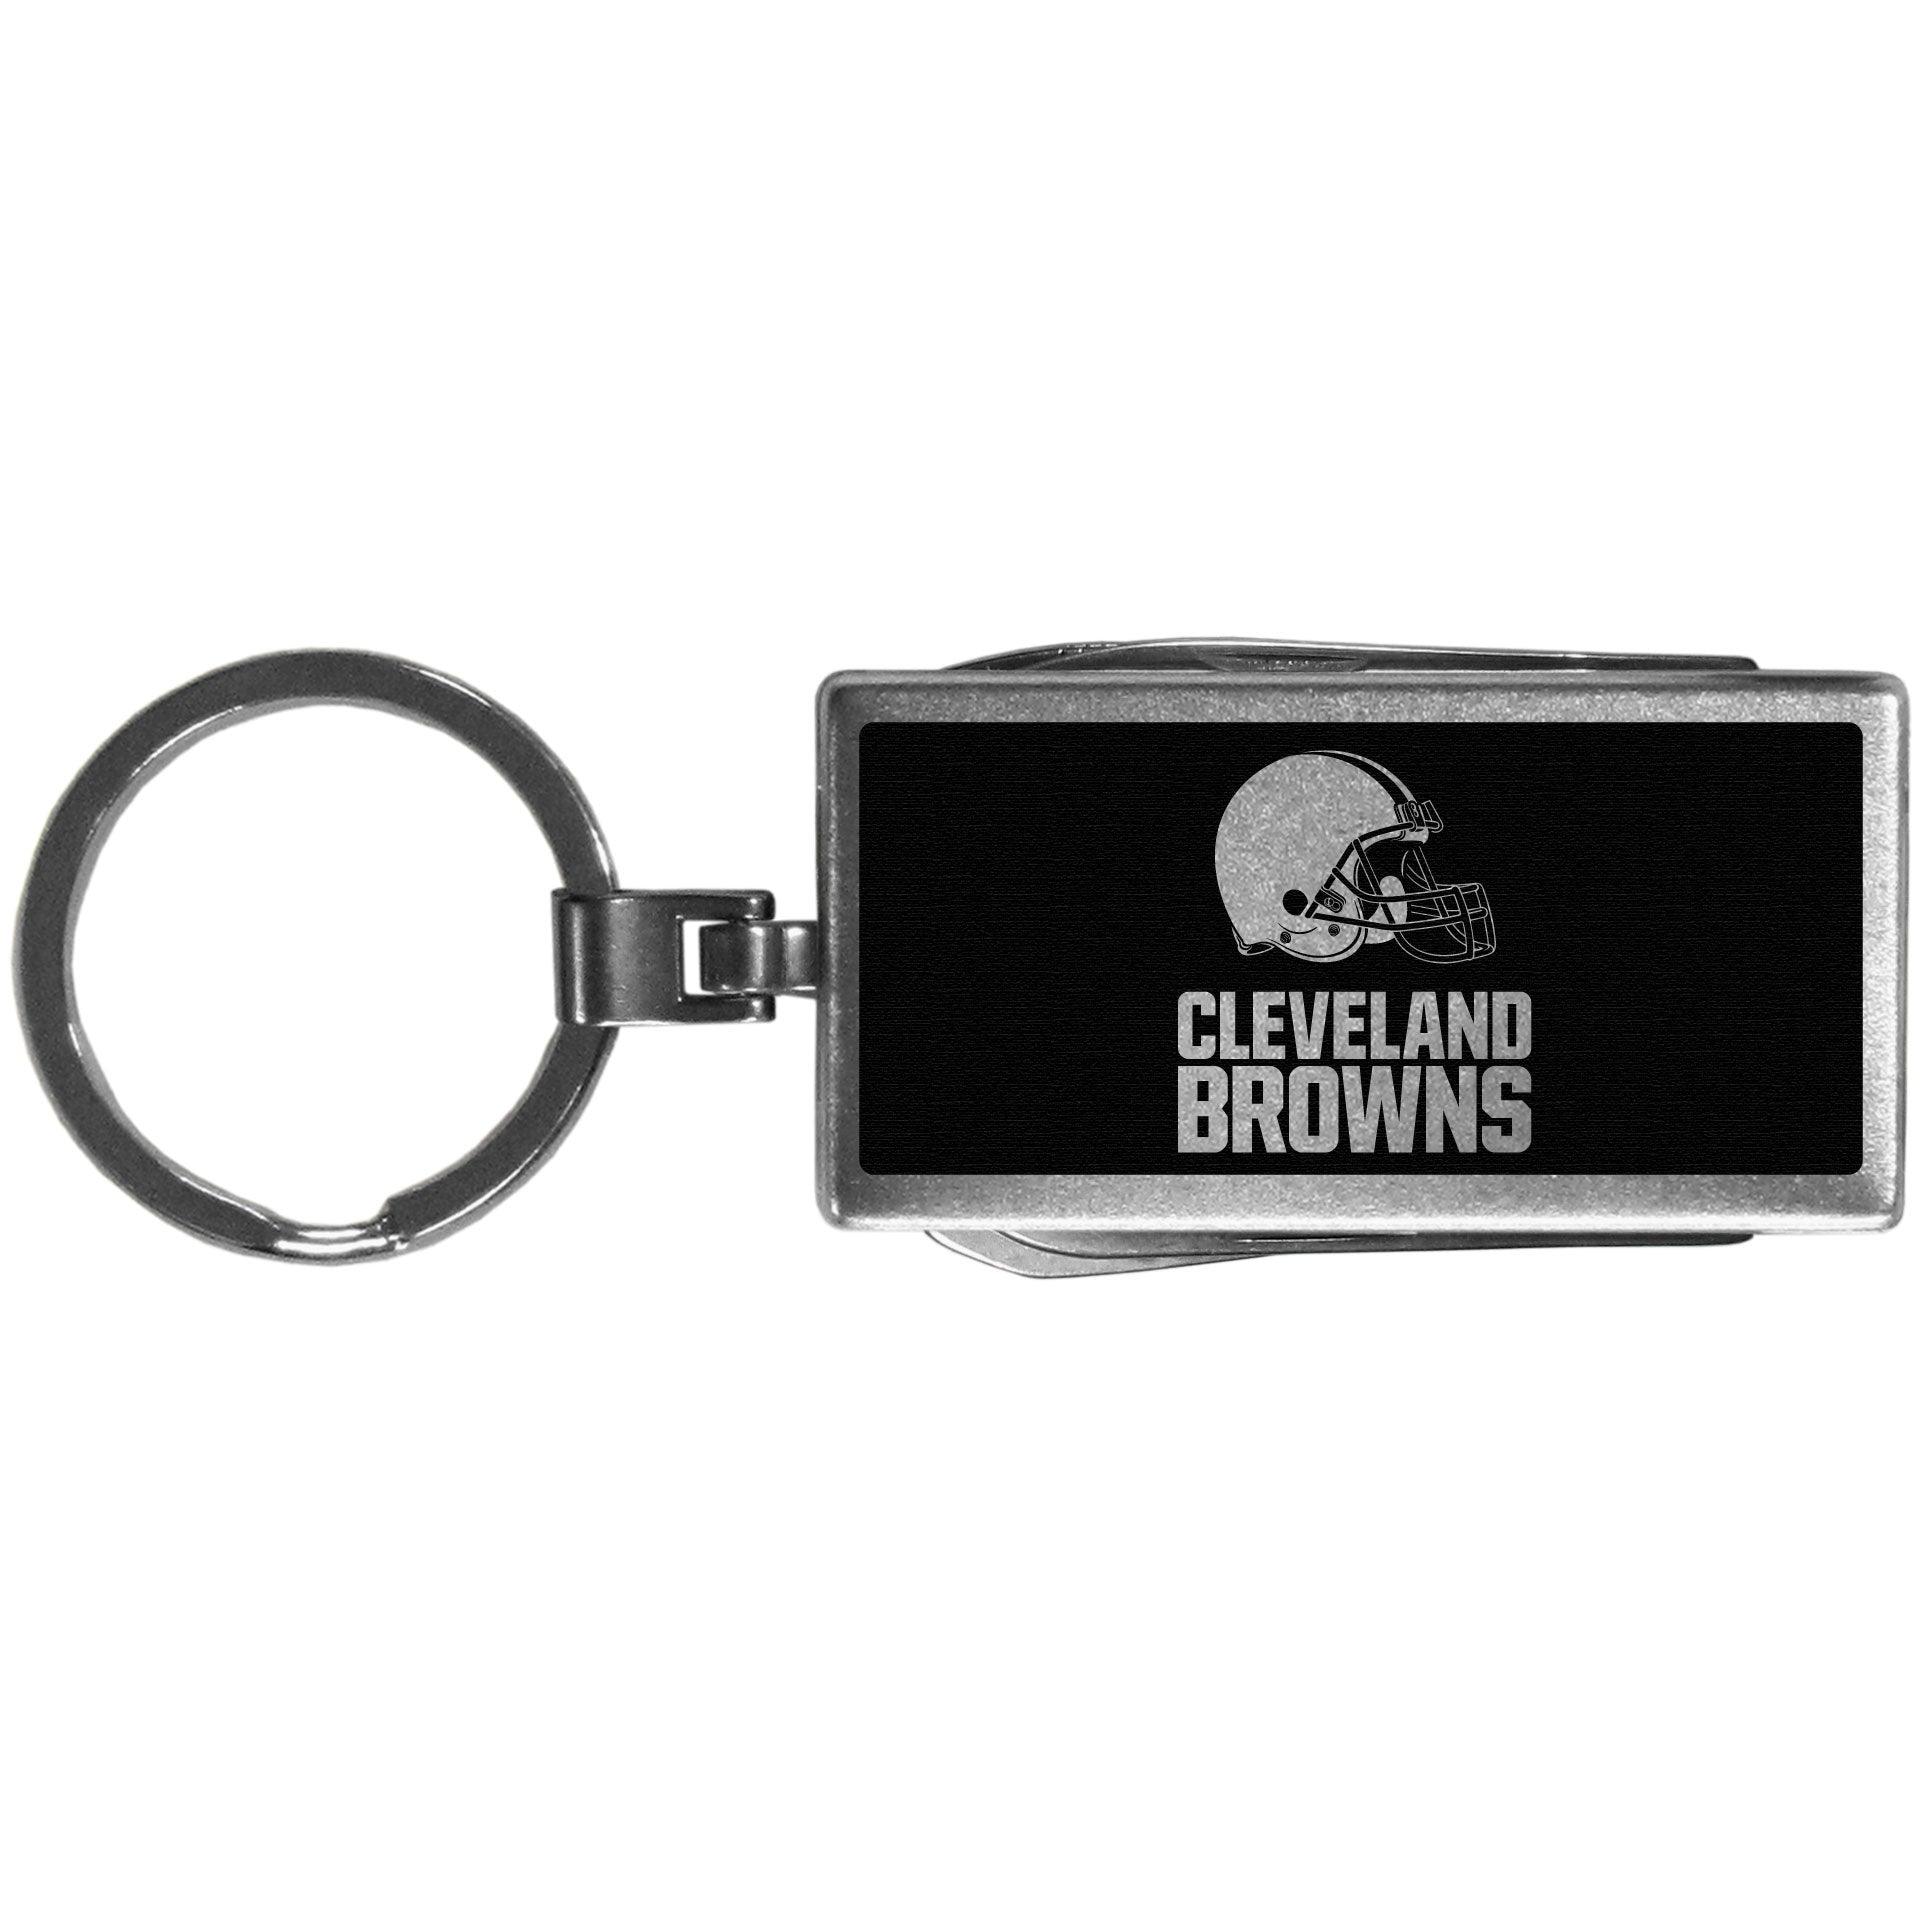 Cleveland Browns Multi-tool Key Chain, Black - Flyclothing LLC